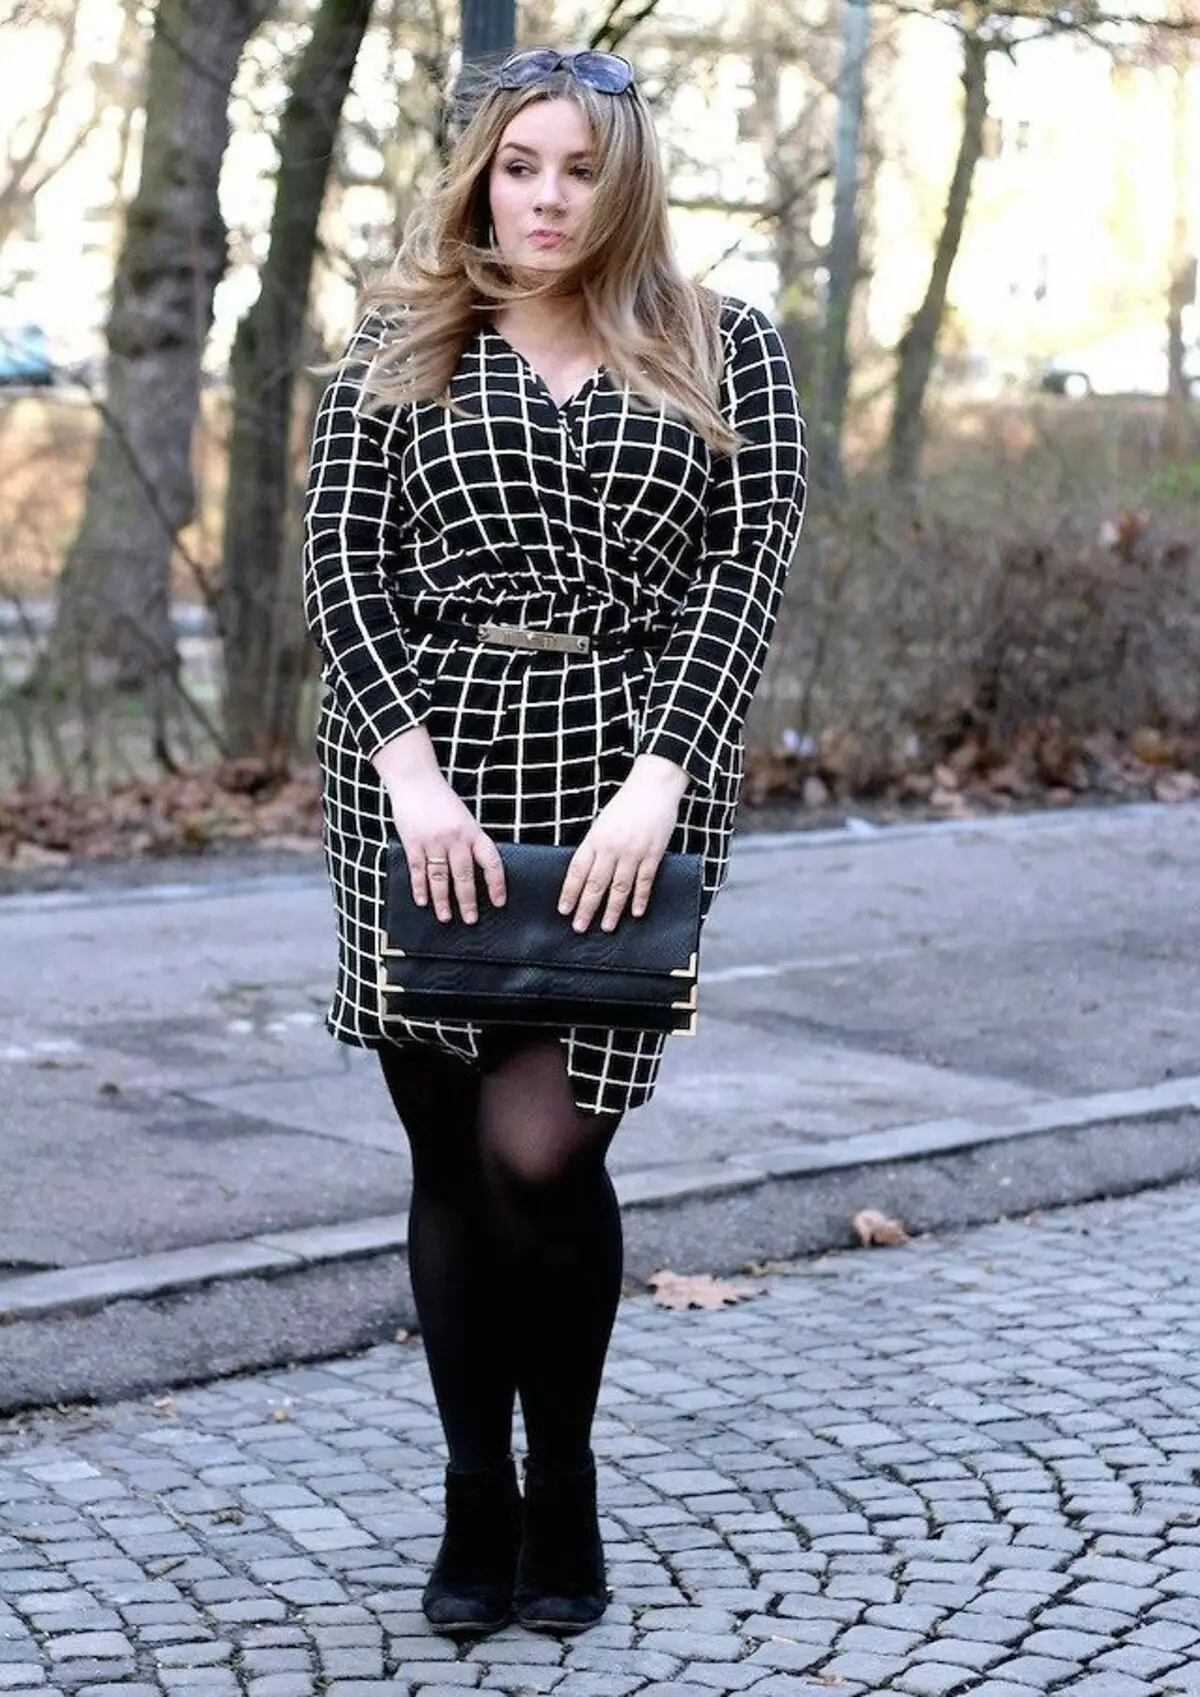 Checkered սեւ զգեստը հոտով լիարժեք կանանց համար